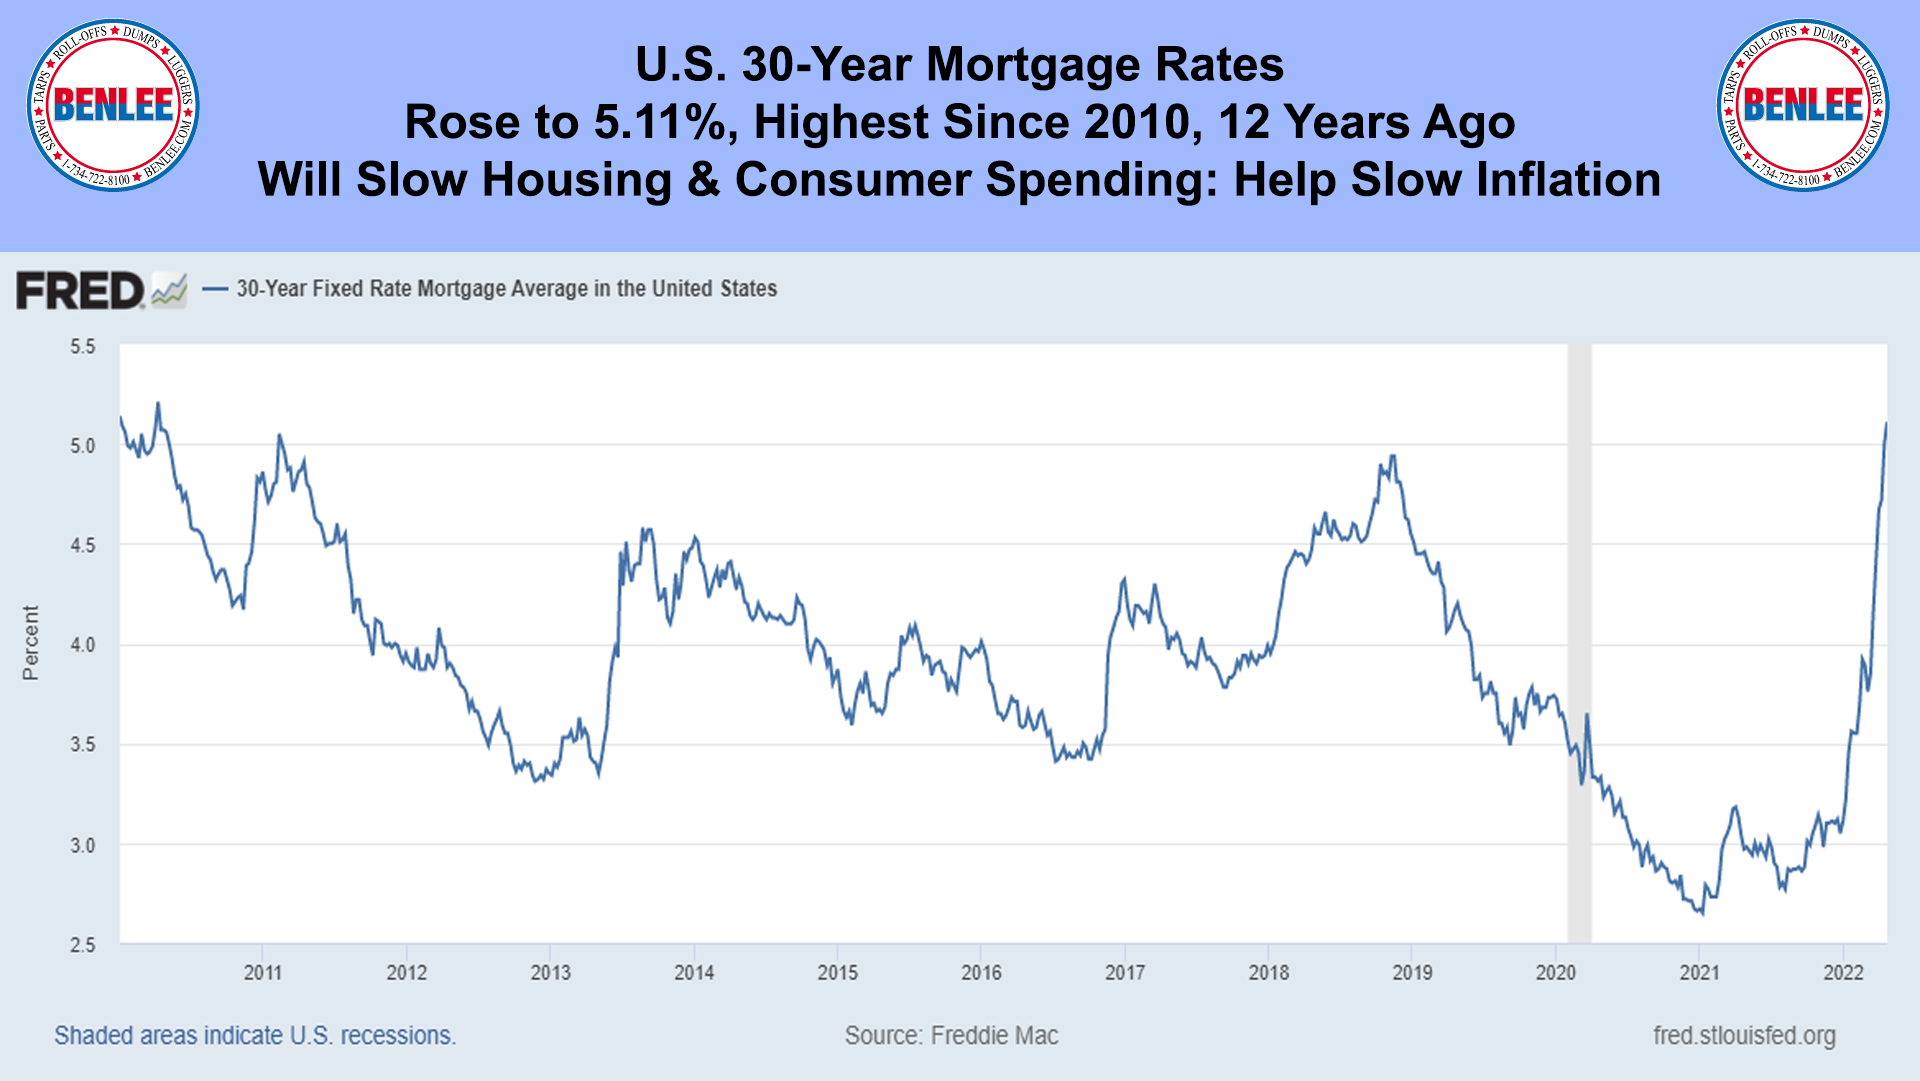 U.S. 30-Year Mortgage Rates